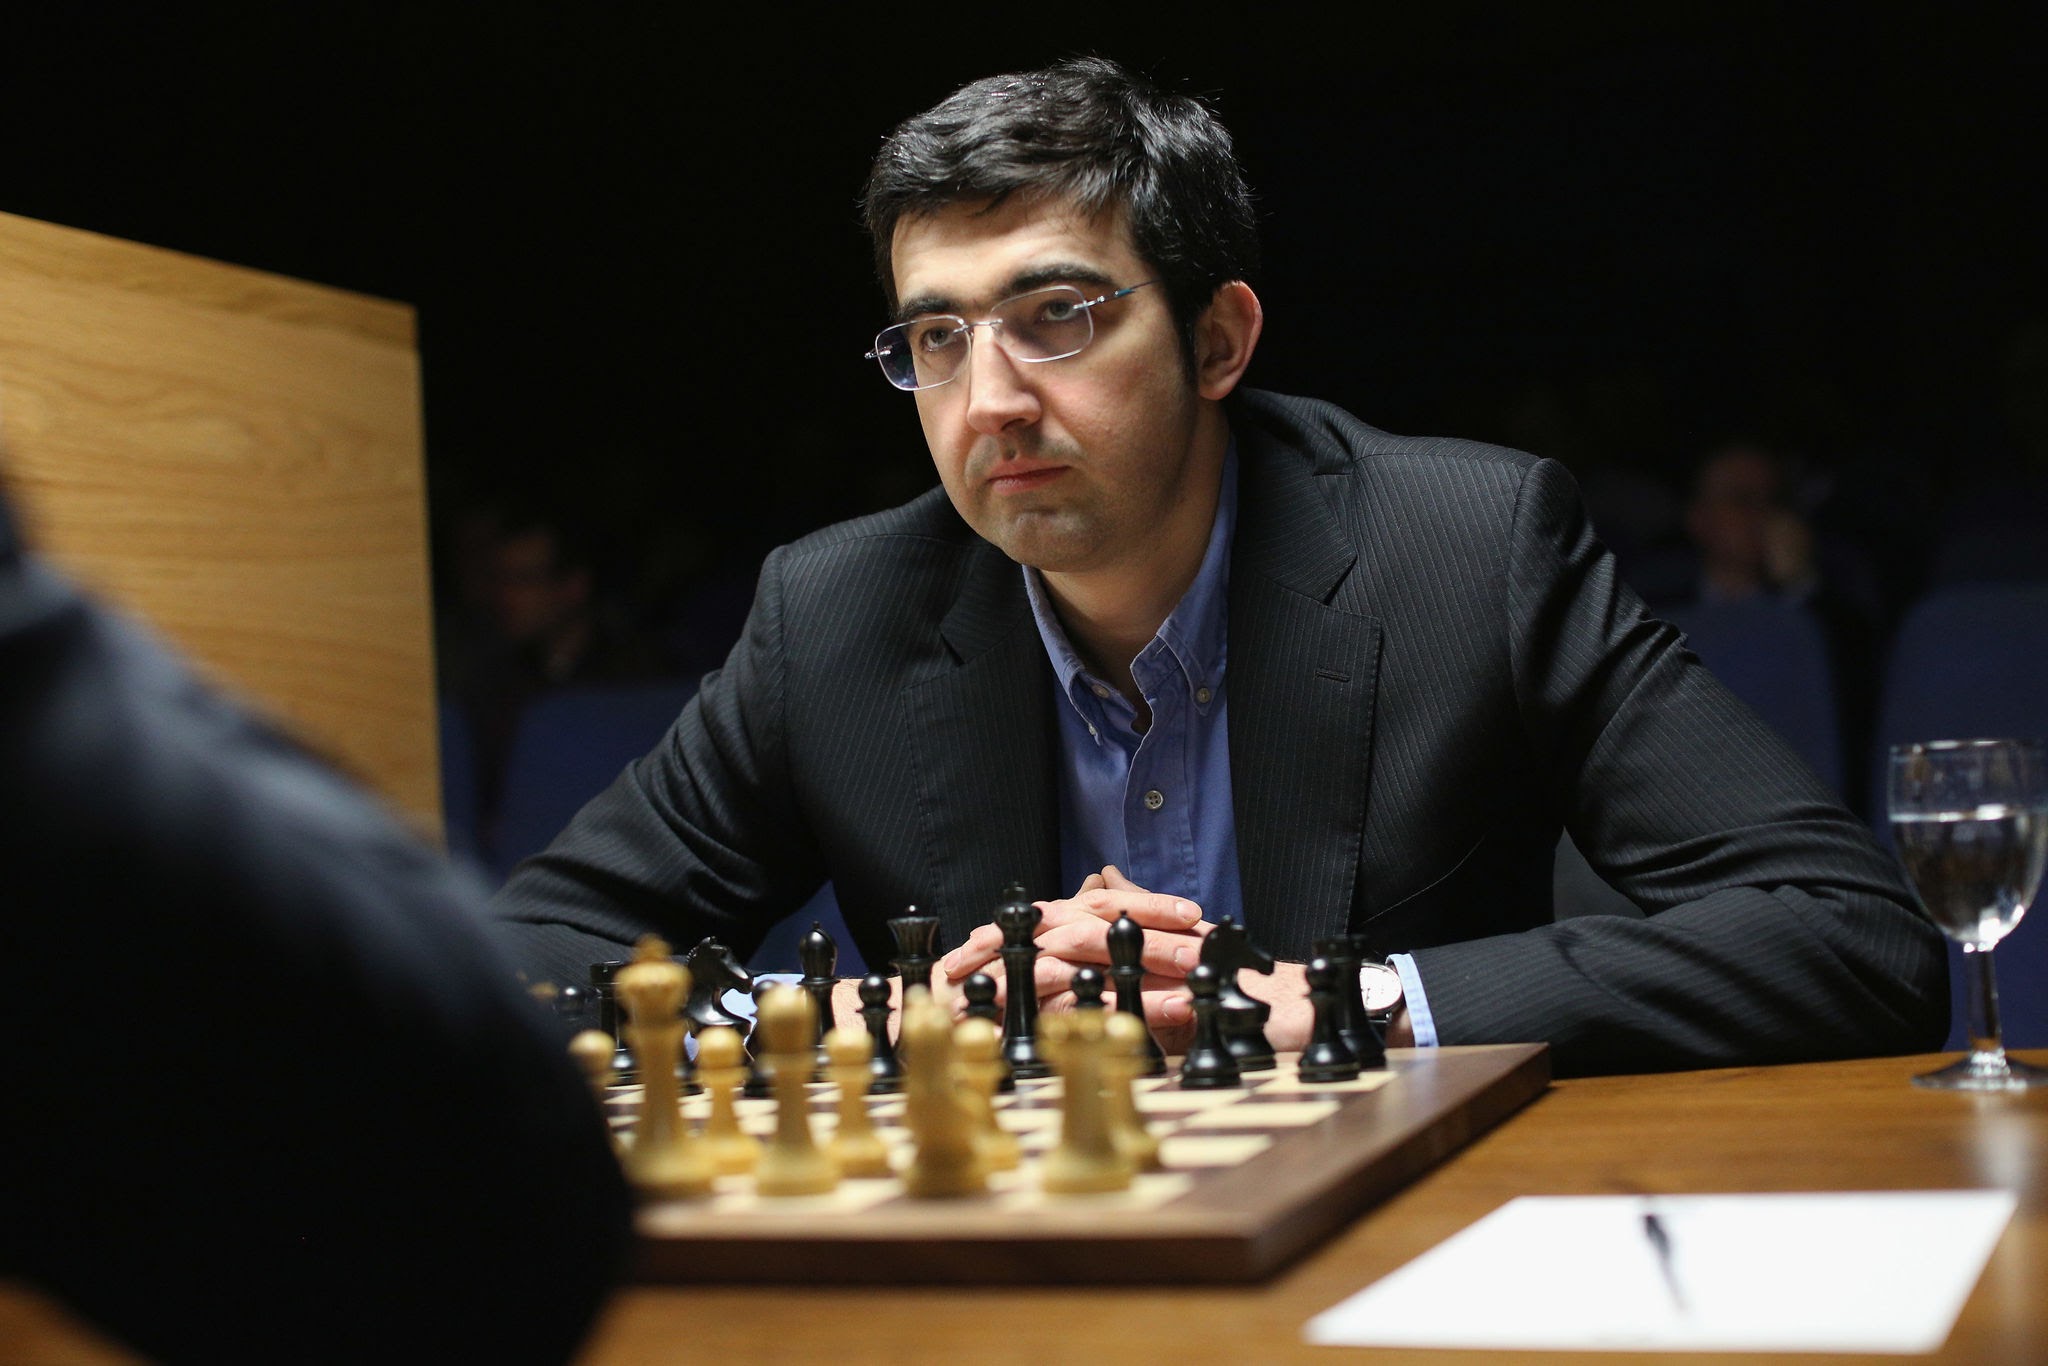 Vladimir Kramnik. Selected games of the 14th world chess champion